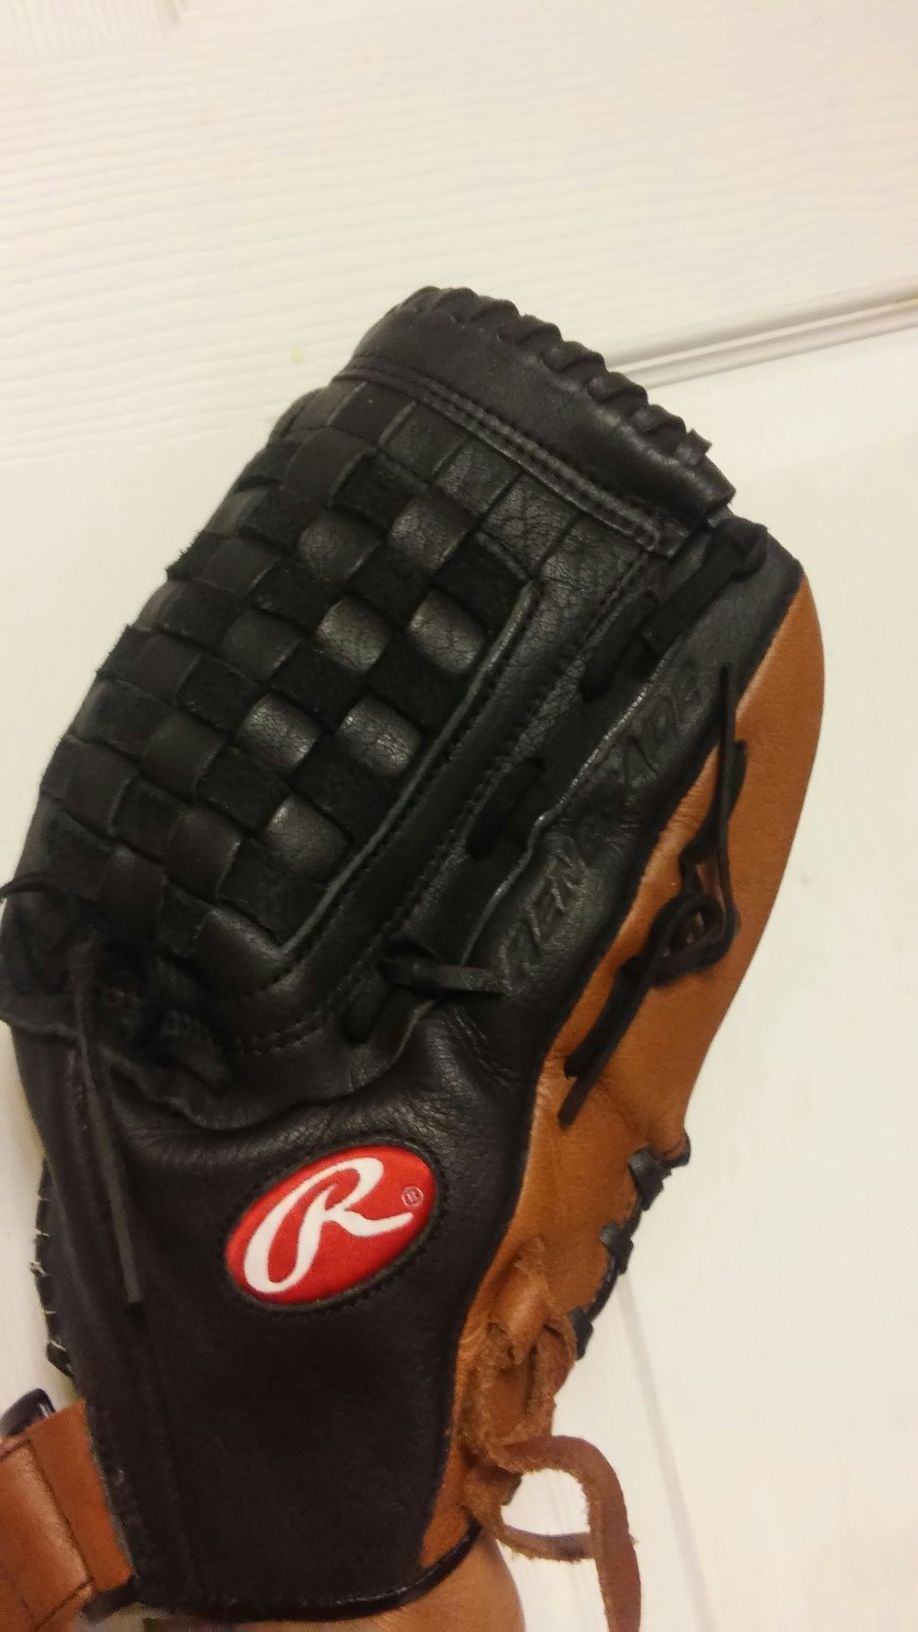 Rawlings 14 inch softball baseball glove